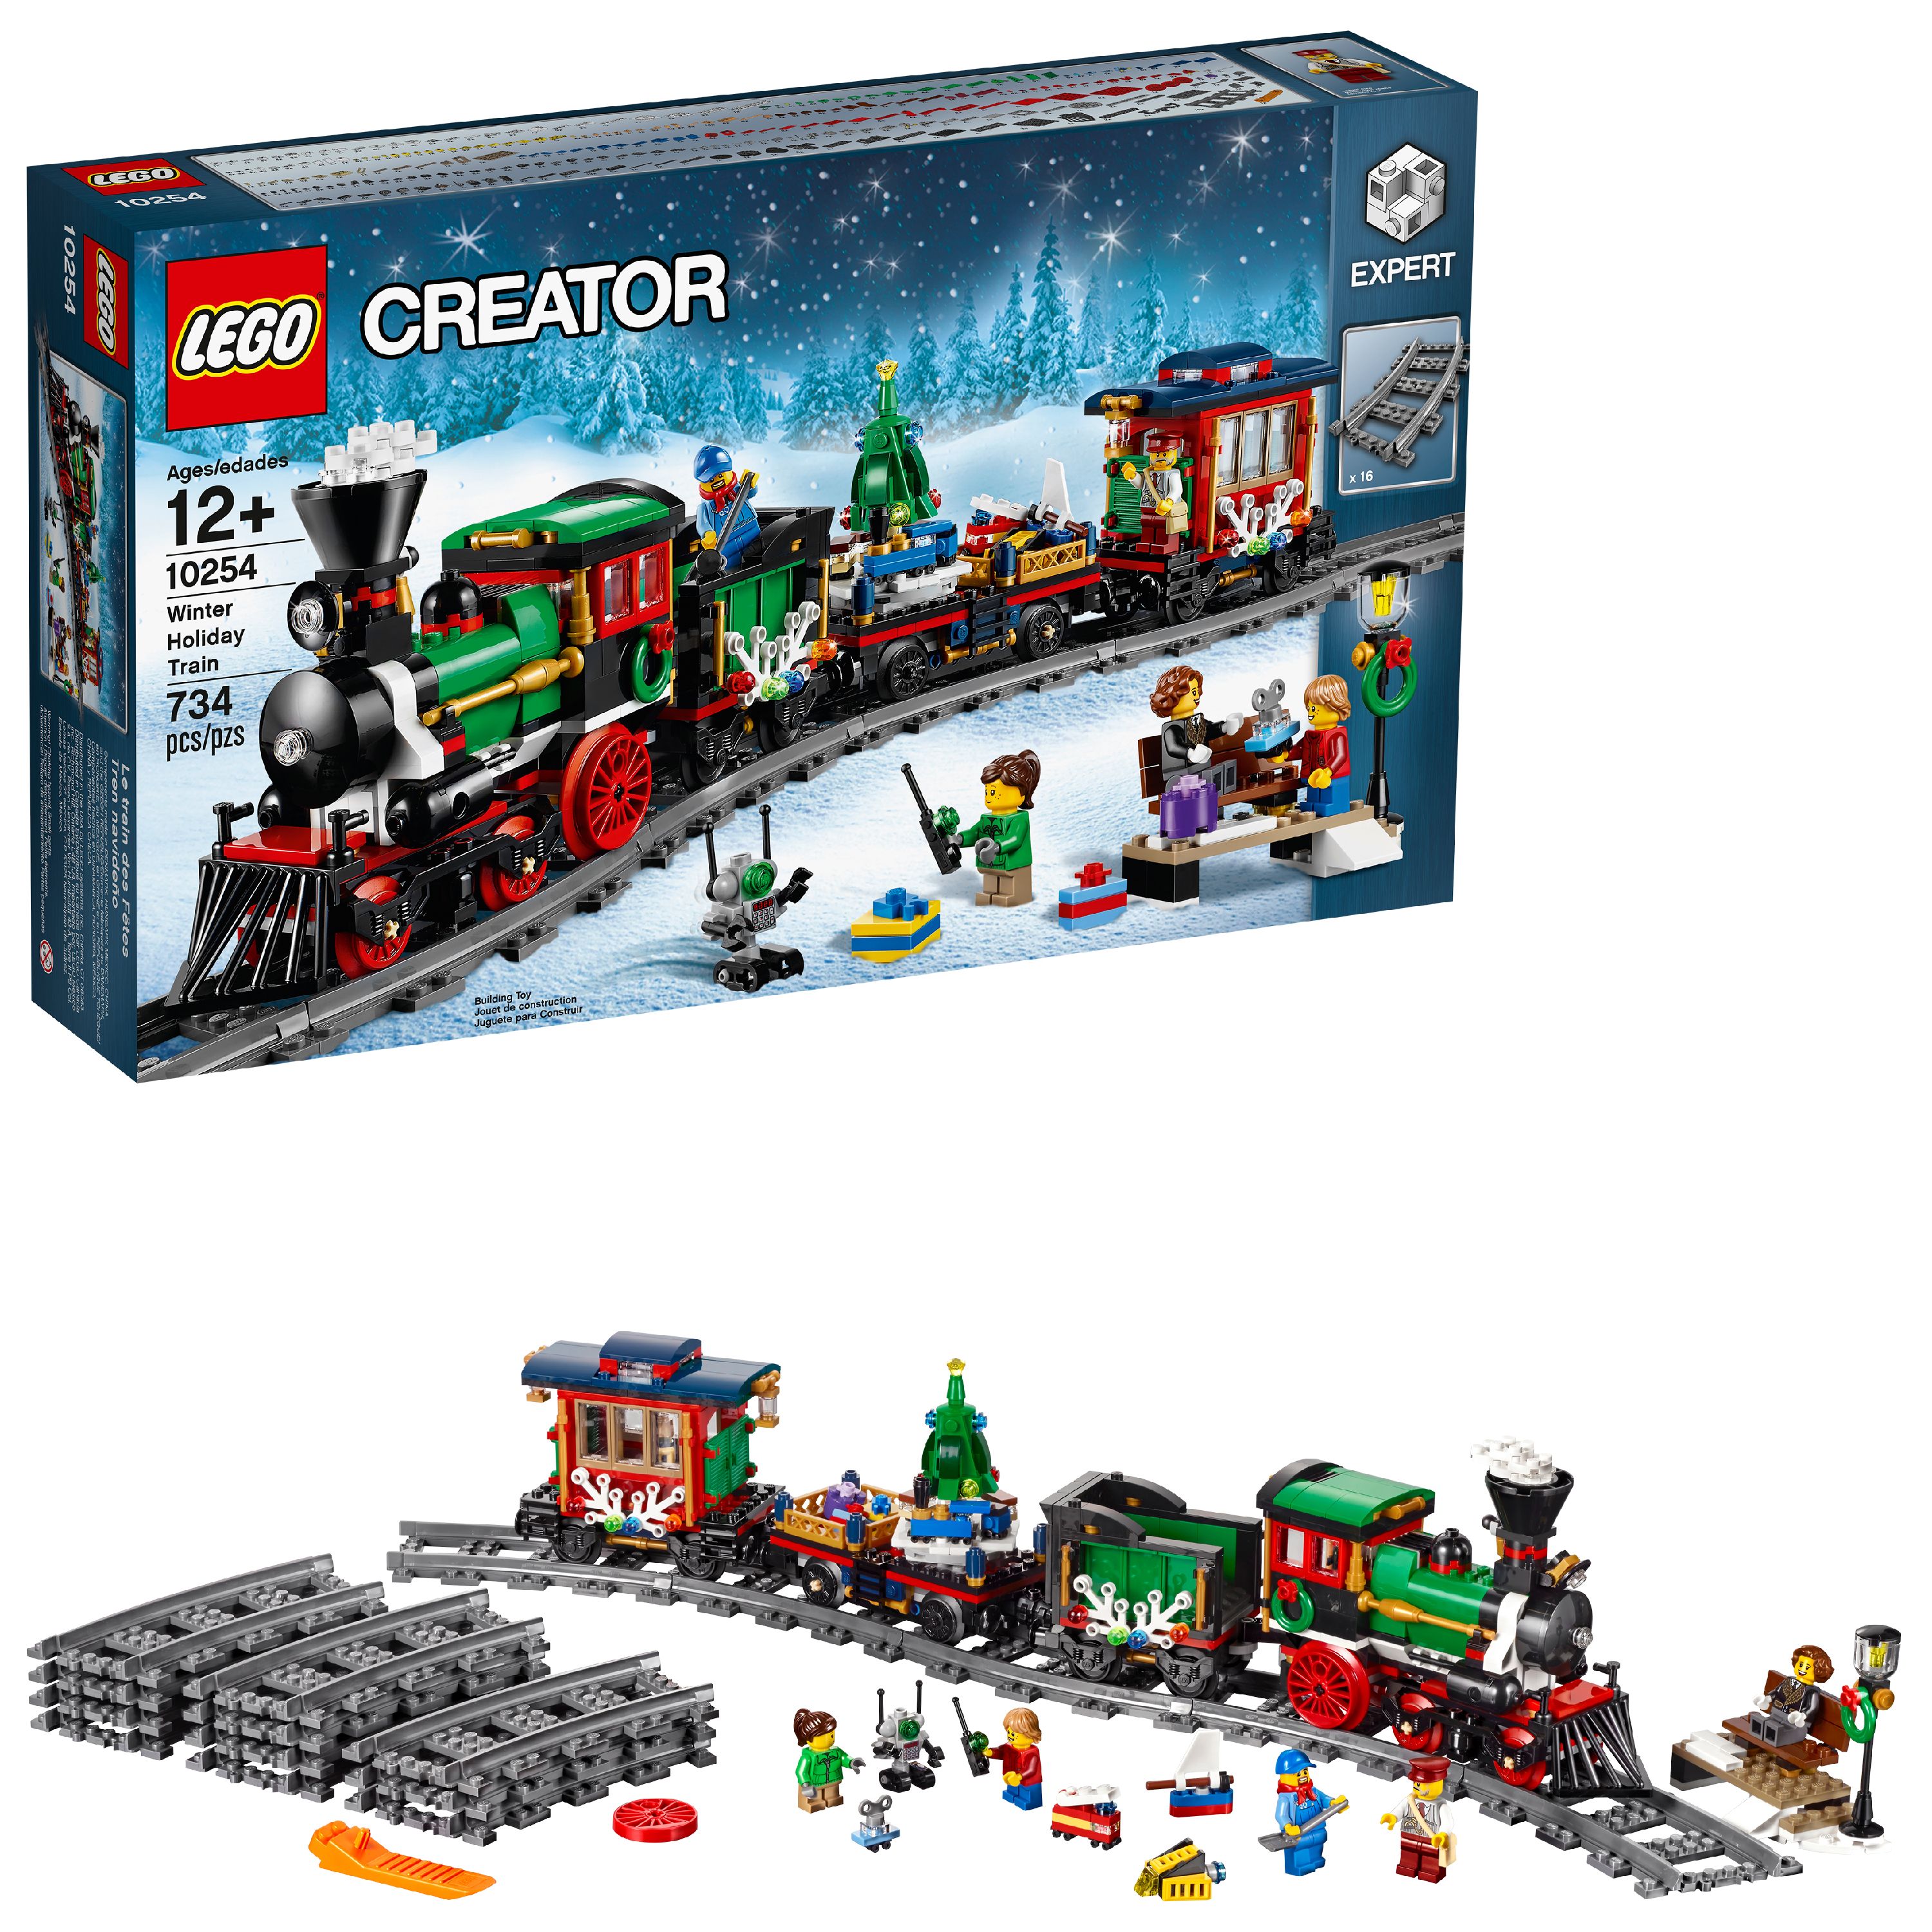 LEGO Creator Expert Winter Holiday Train 10254 - image 1 of 6